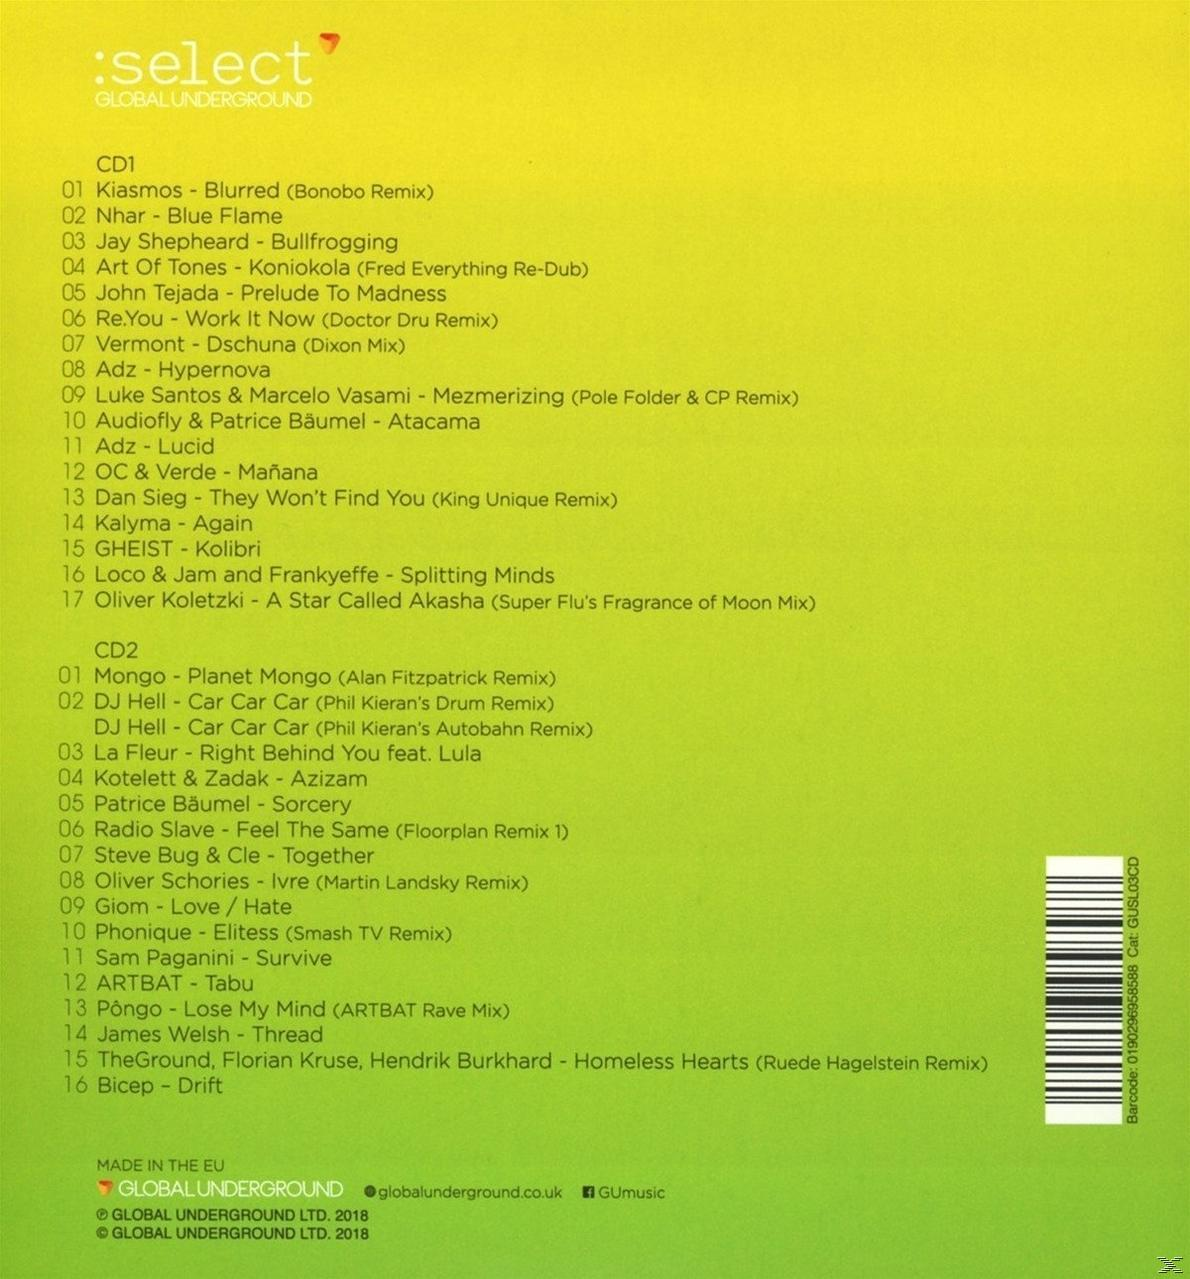 Global - Global (CD) Underground: - Select #3 Underground